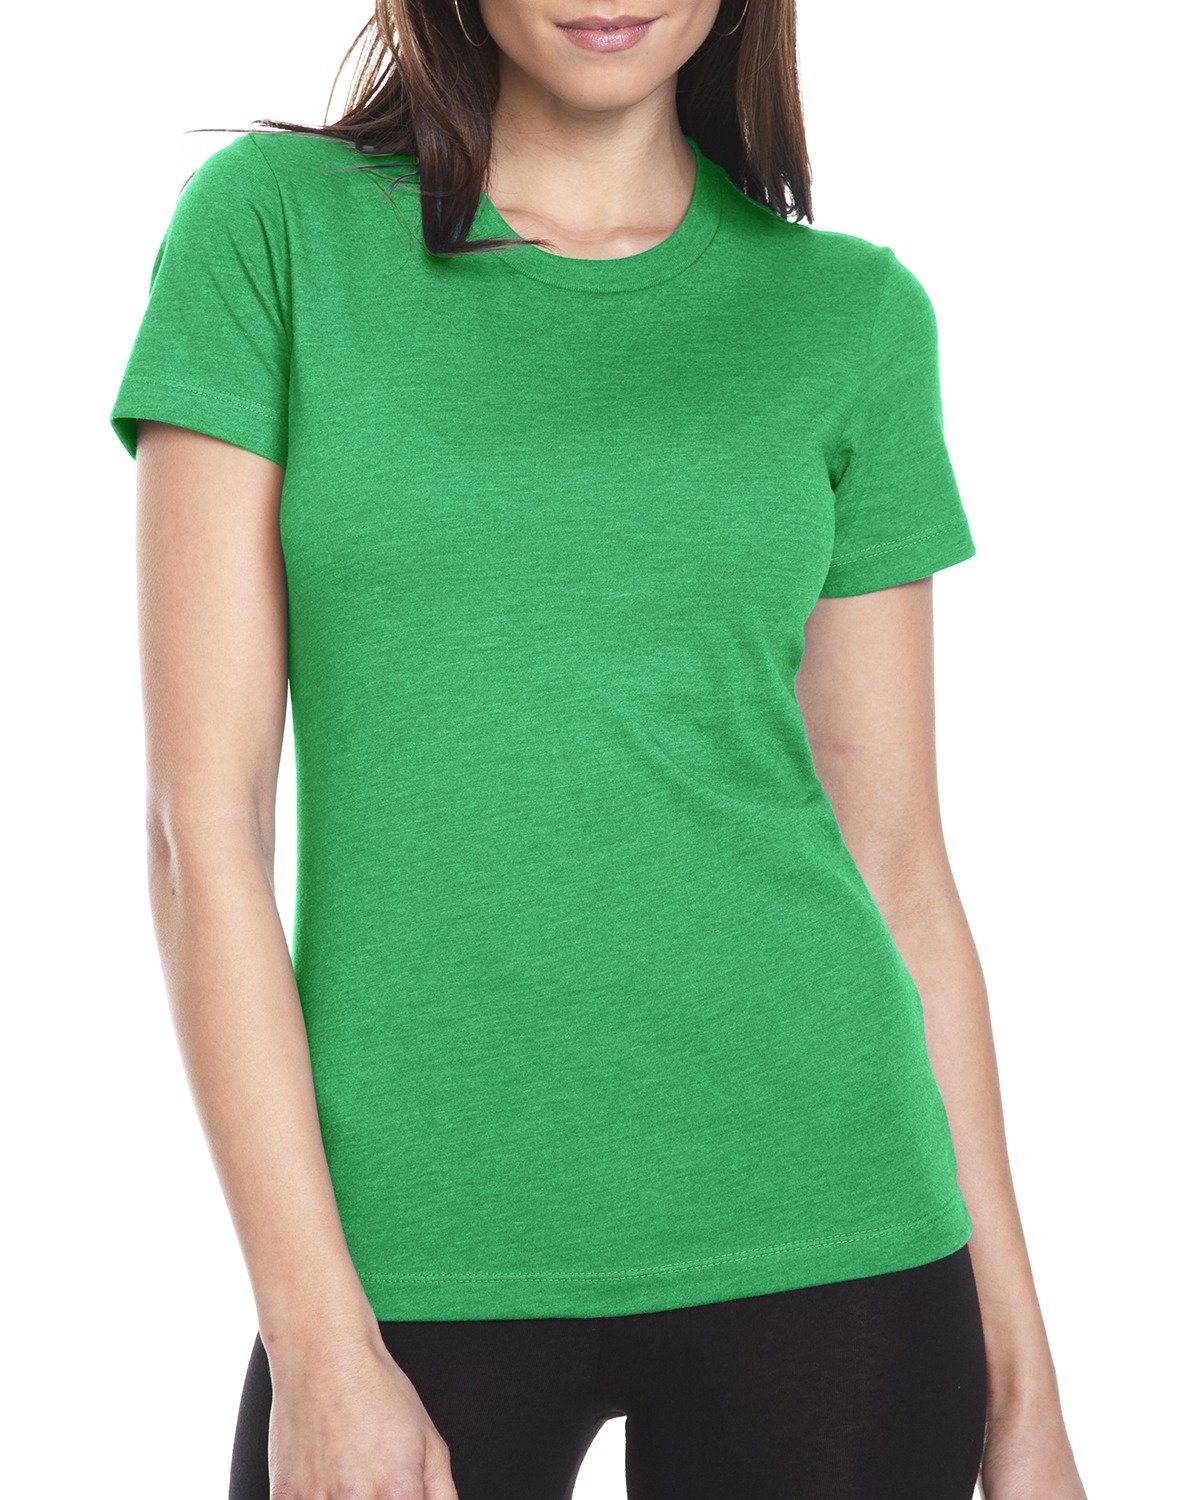 Next Level Ladies' CVC T-Shirt KELLY GREEN 